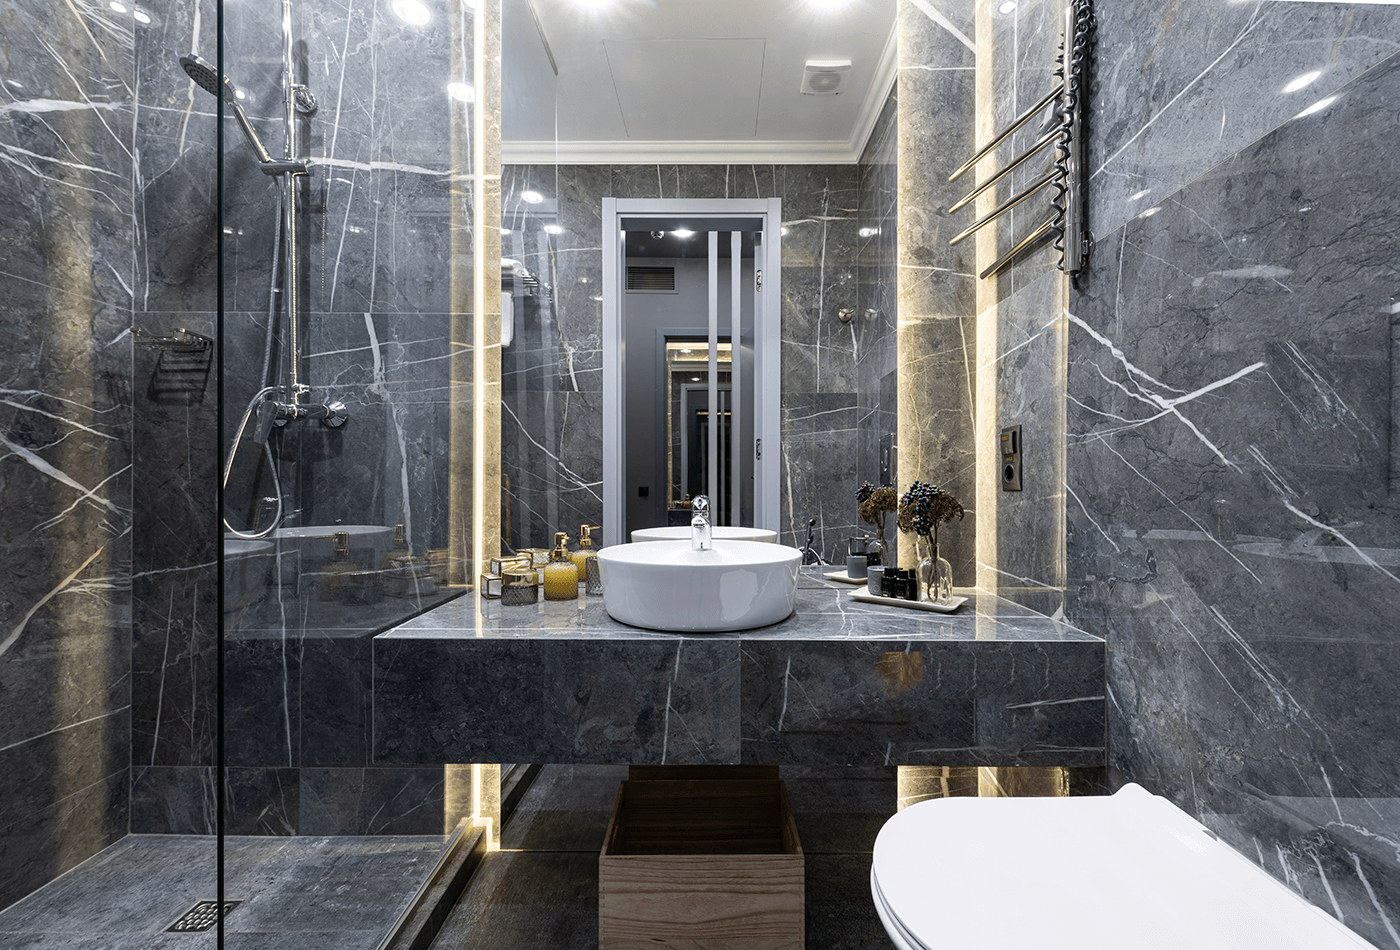 A Timeless and Elegant Black Granite Kitchen and Bathroom?